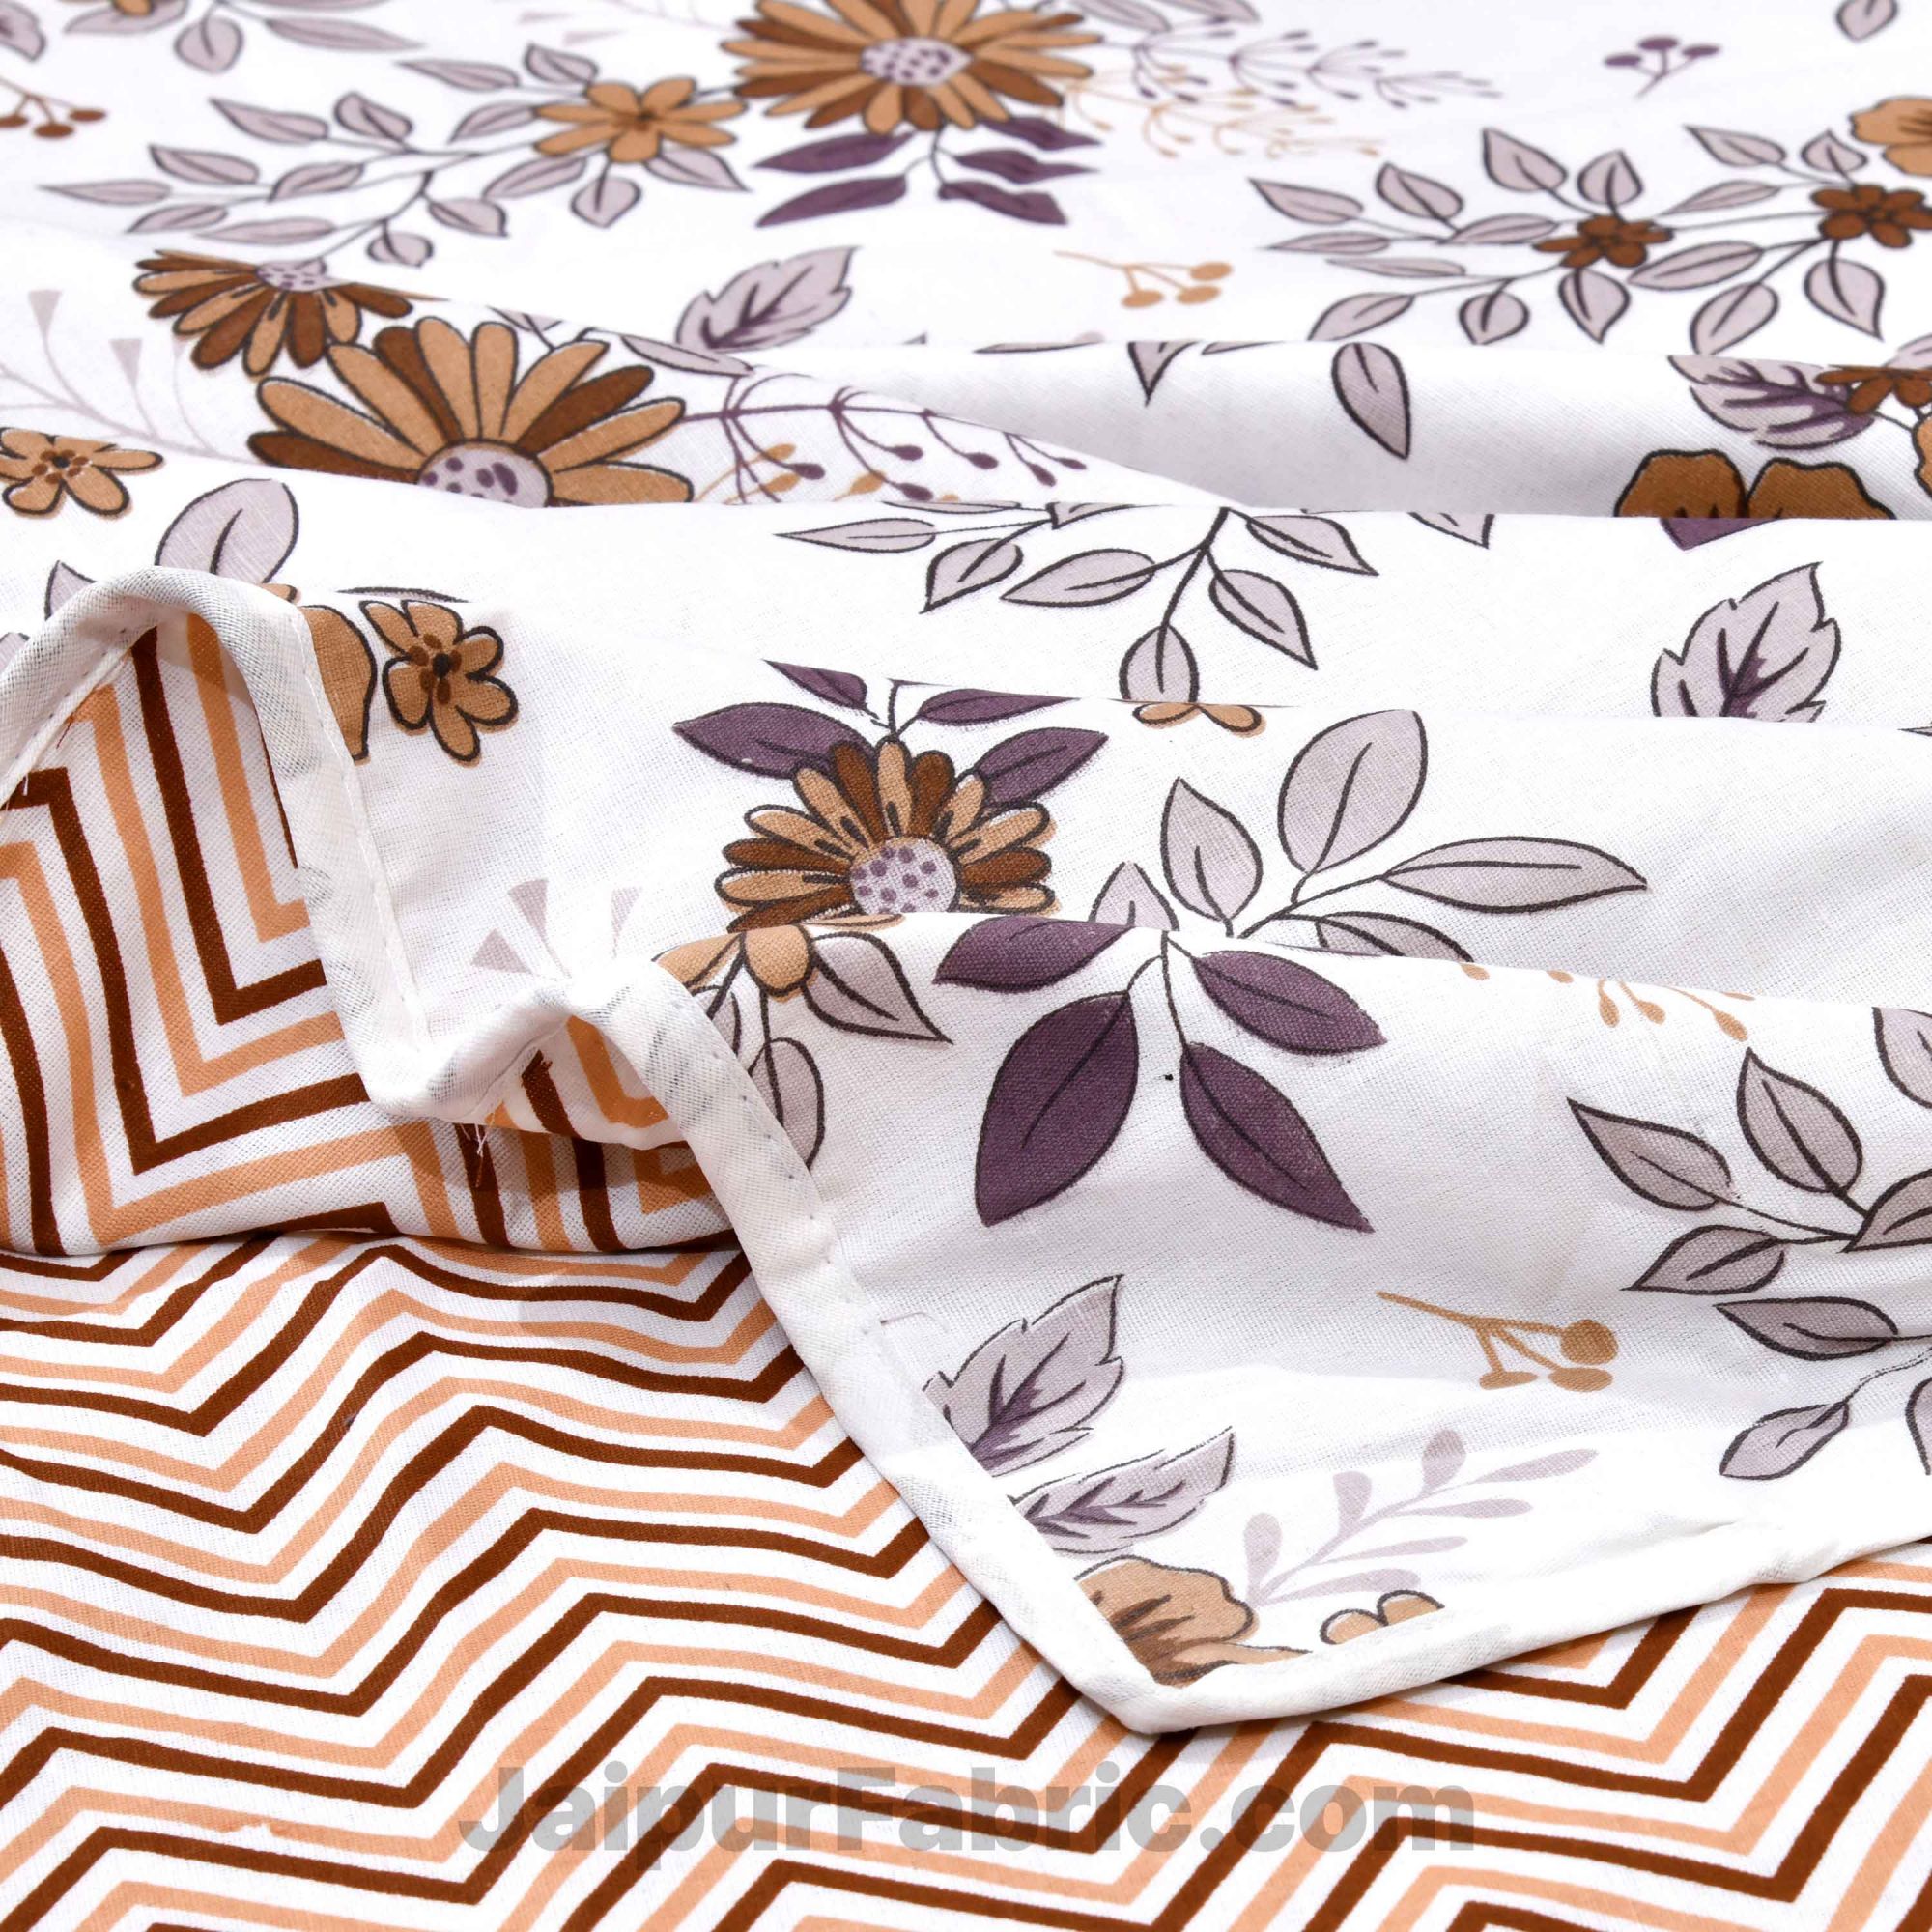 Lightweight Reversible Double Bed Dohar Grey FlowerSkin Friendly Pure Cotton MulMul Blanket / AC Comforter / Summer Quilt